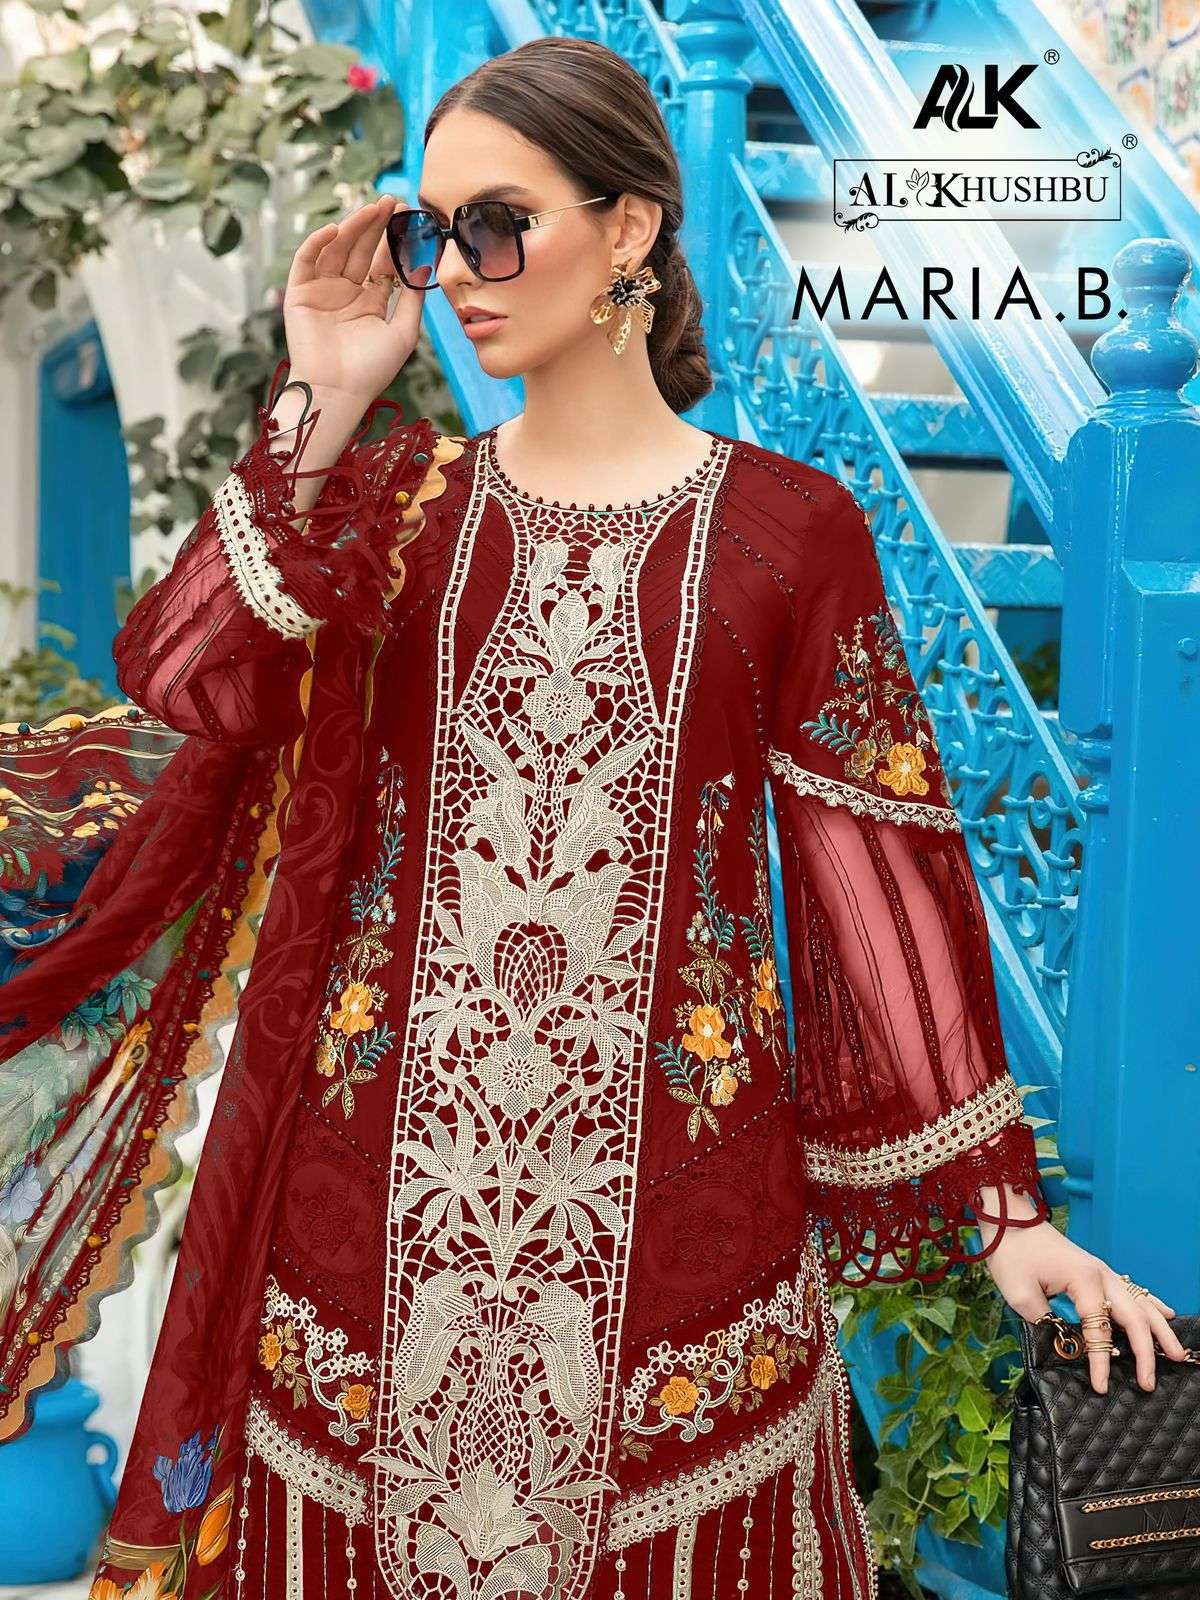 Al Khushbu Maria B Alk 5090 Colors Latest Pakistani Cotton Dress Suppliers